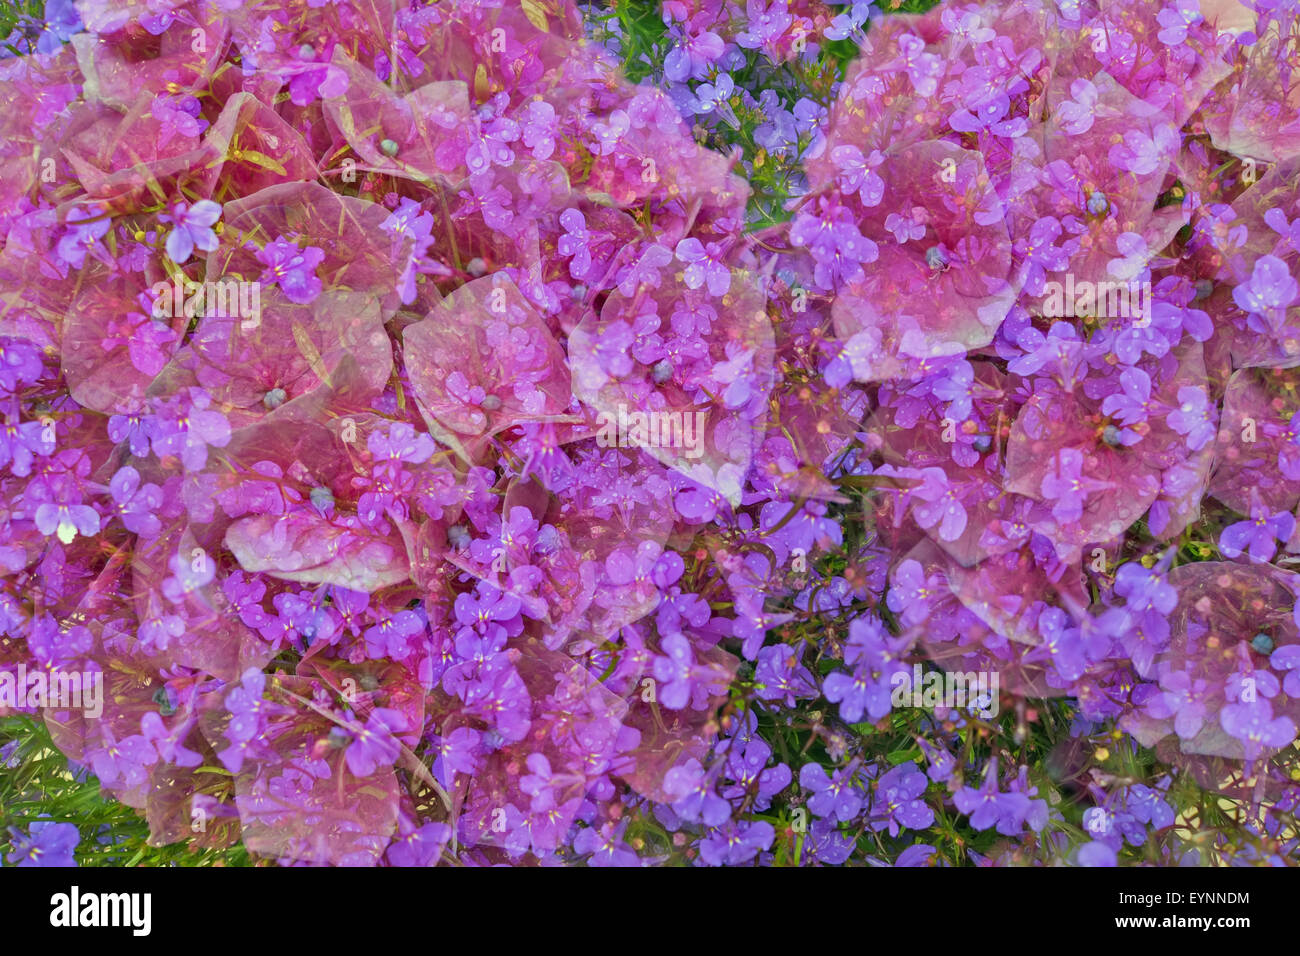 various flowers taken on double exposure on single frame Stock Photo